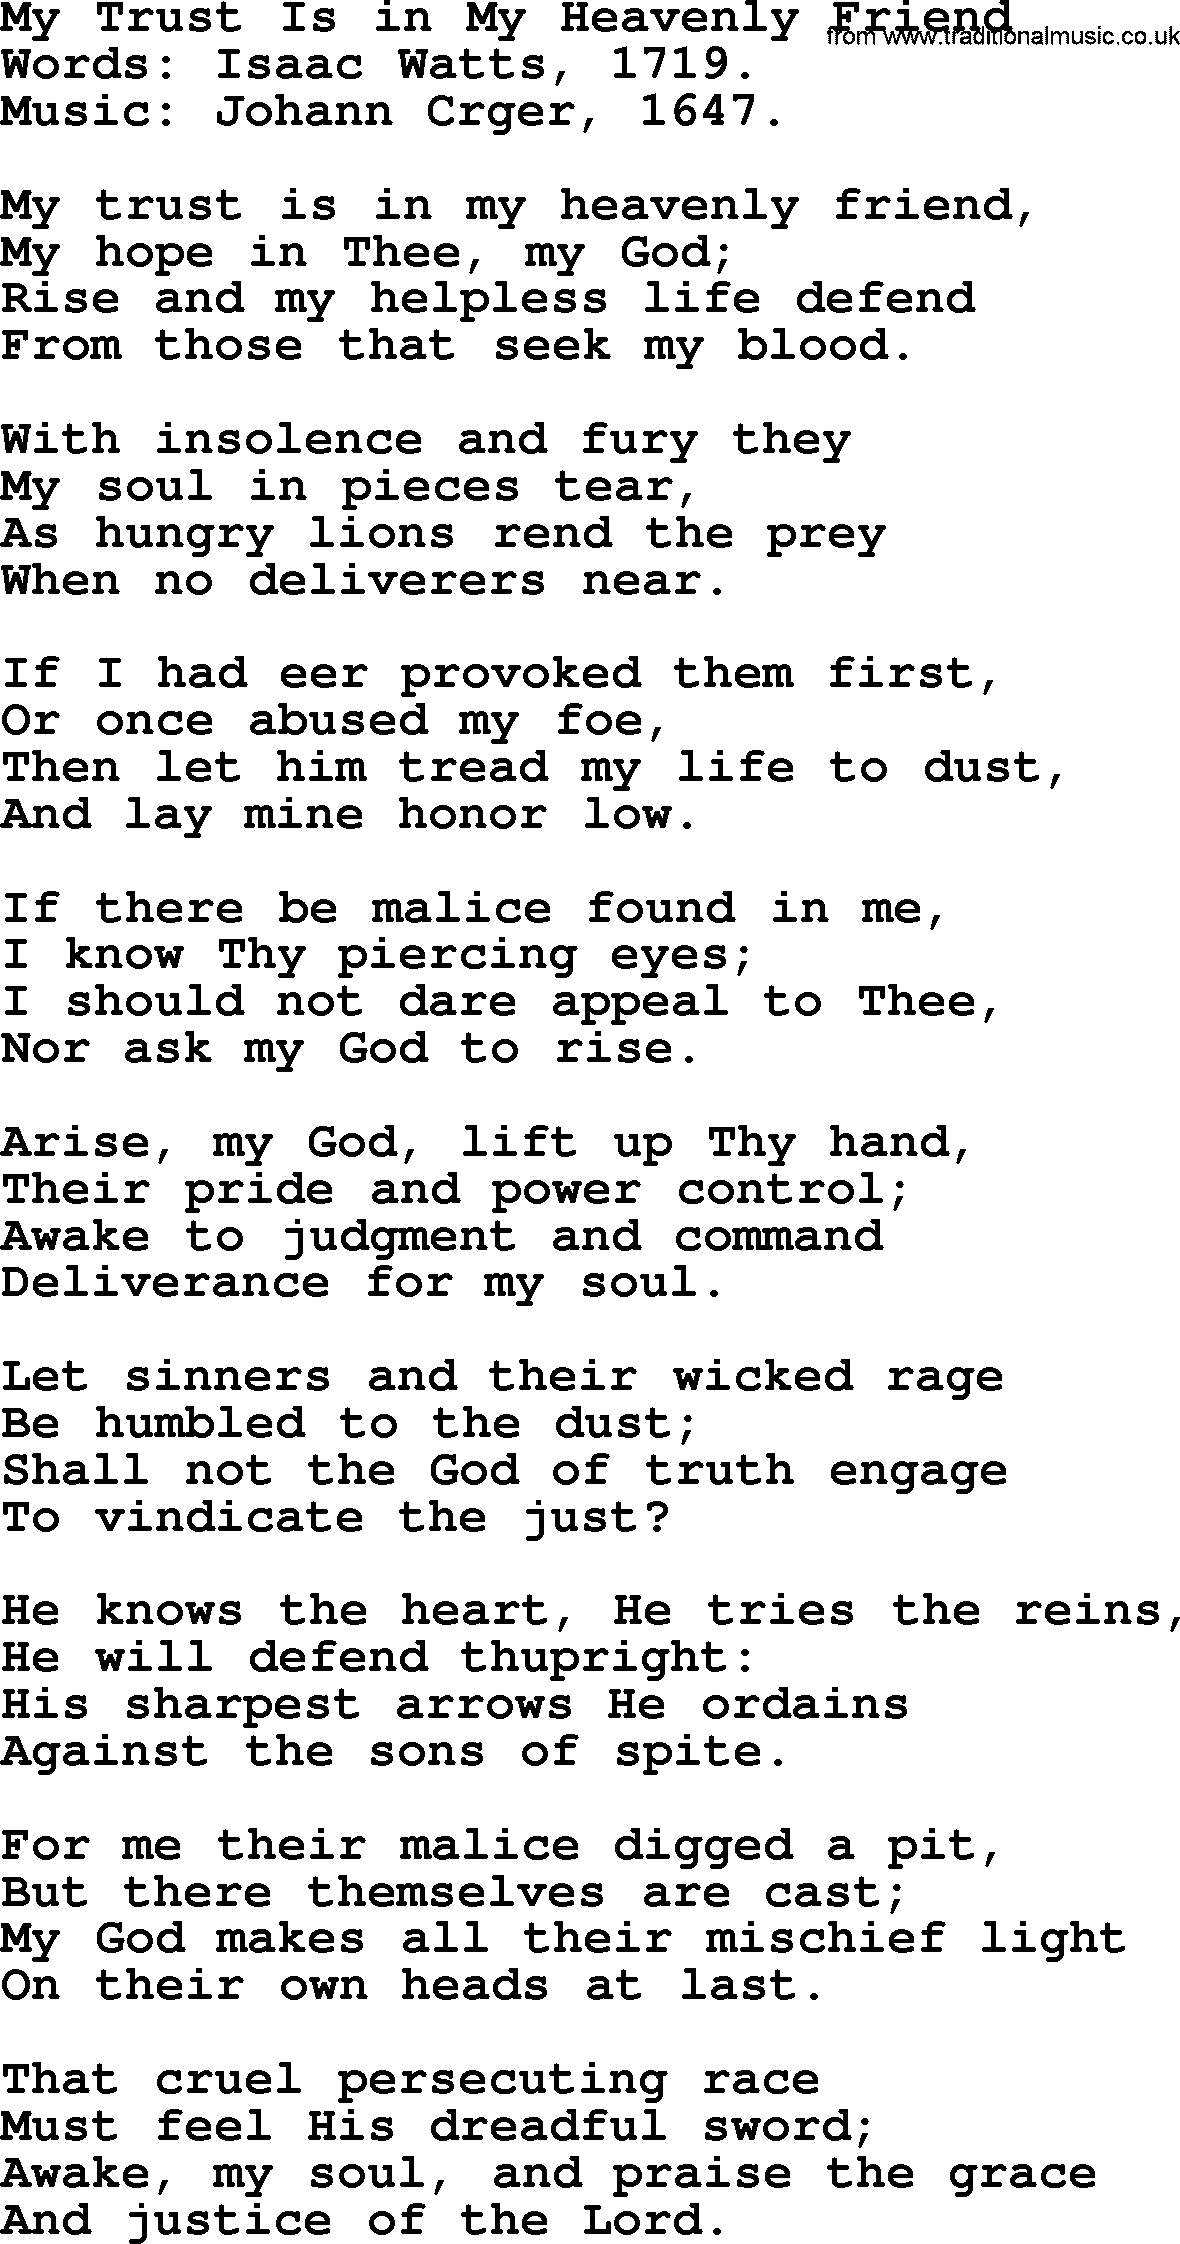 Isaac Watts Christian hymn: My Trust Is in My Heavenly Friend- lyricss